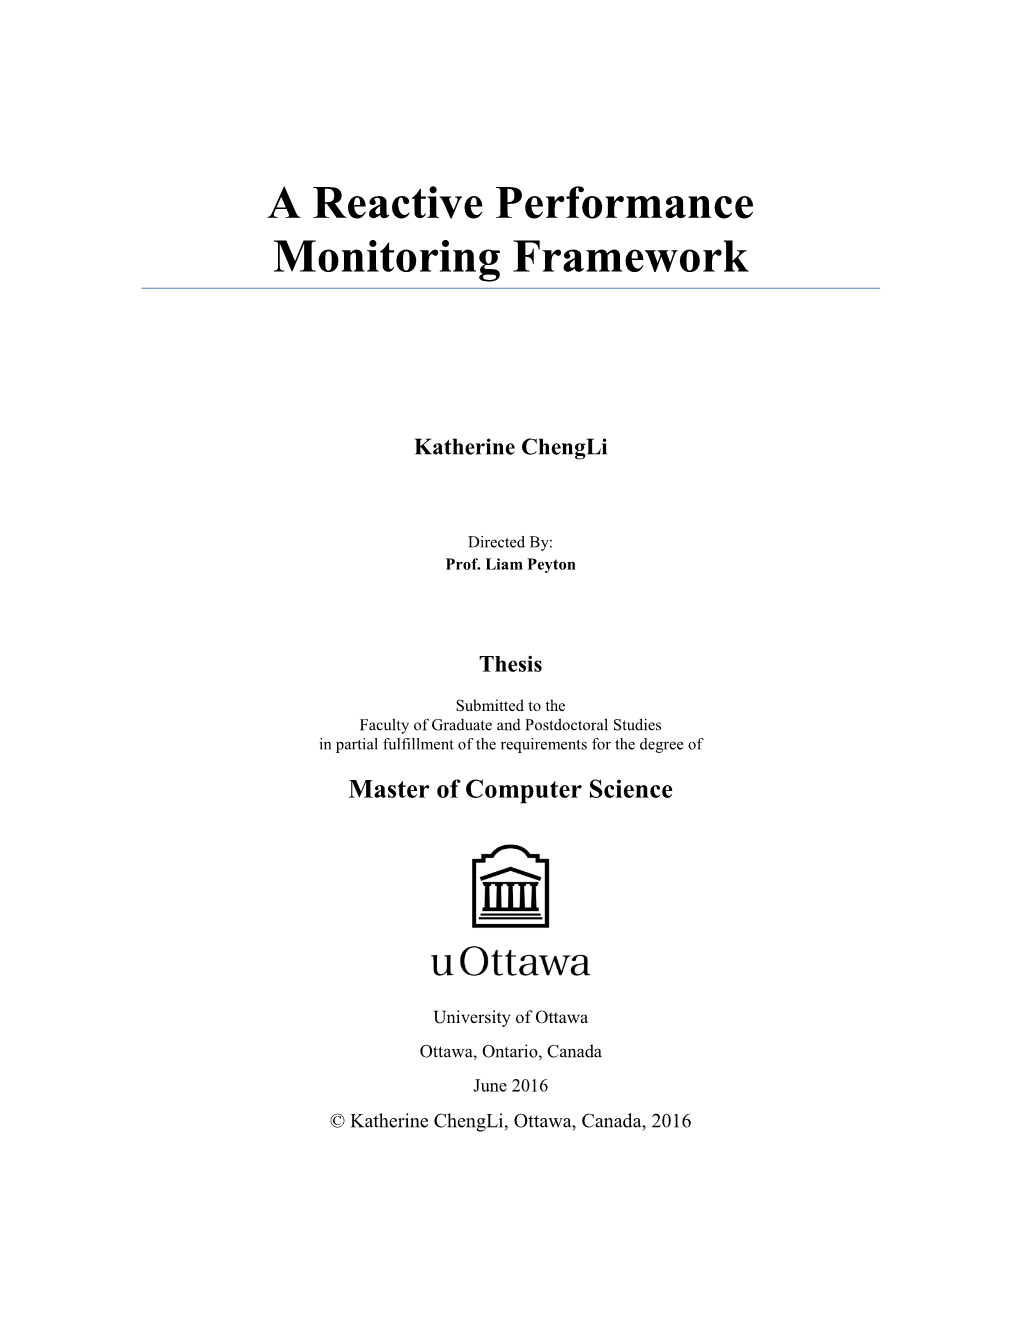 A Reactive Performance Monitoring Framework